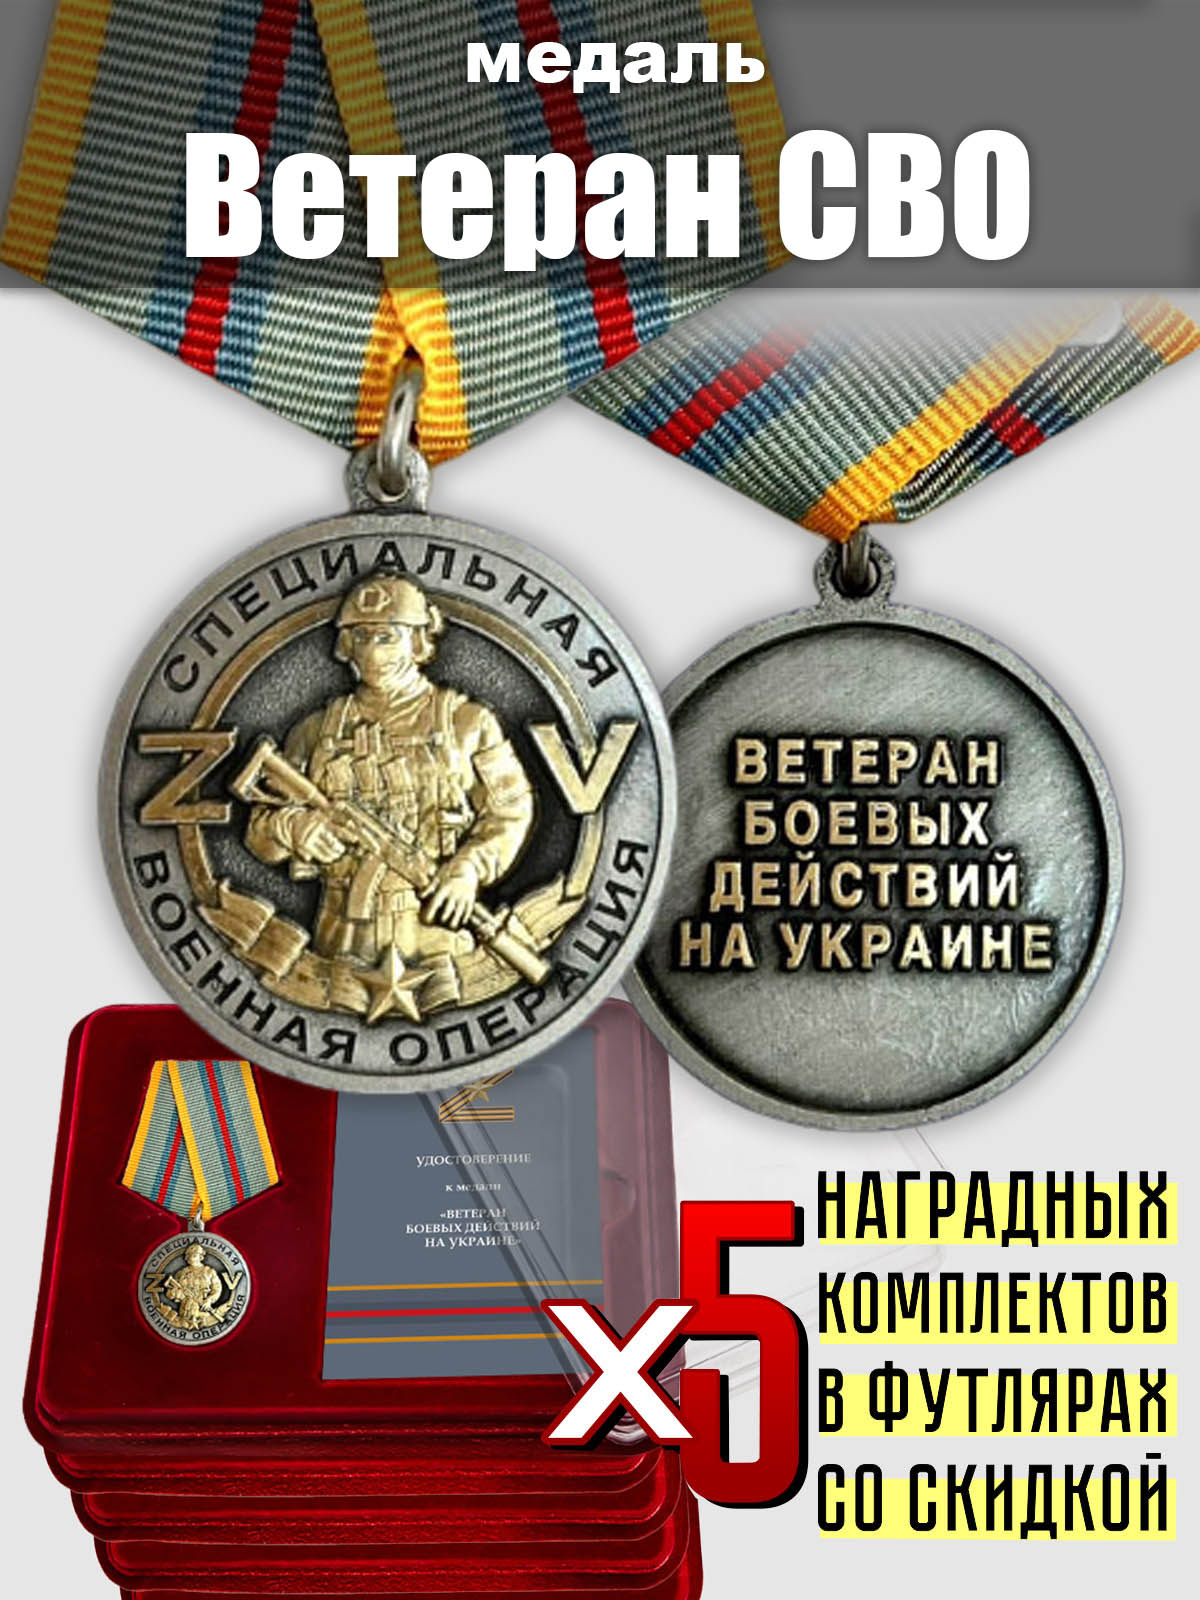 Медали ветеранам СВО (5 шт.)